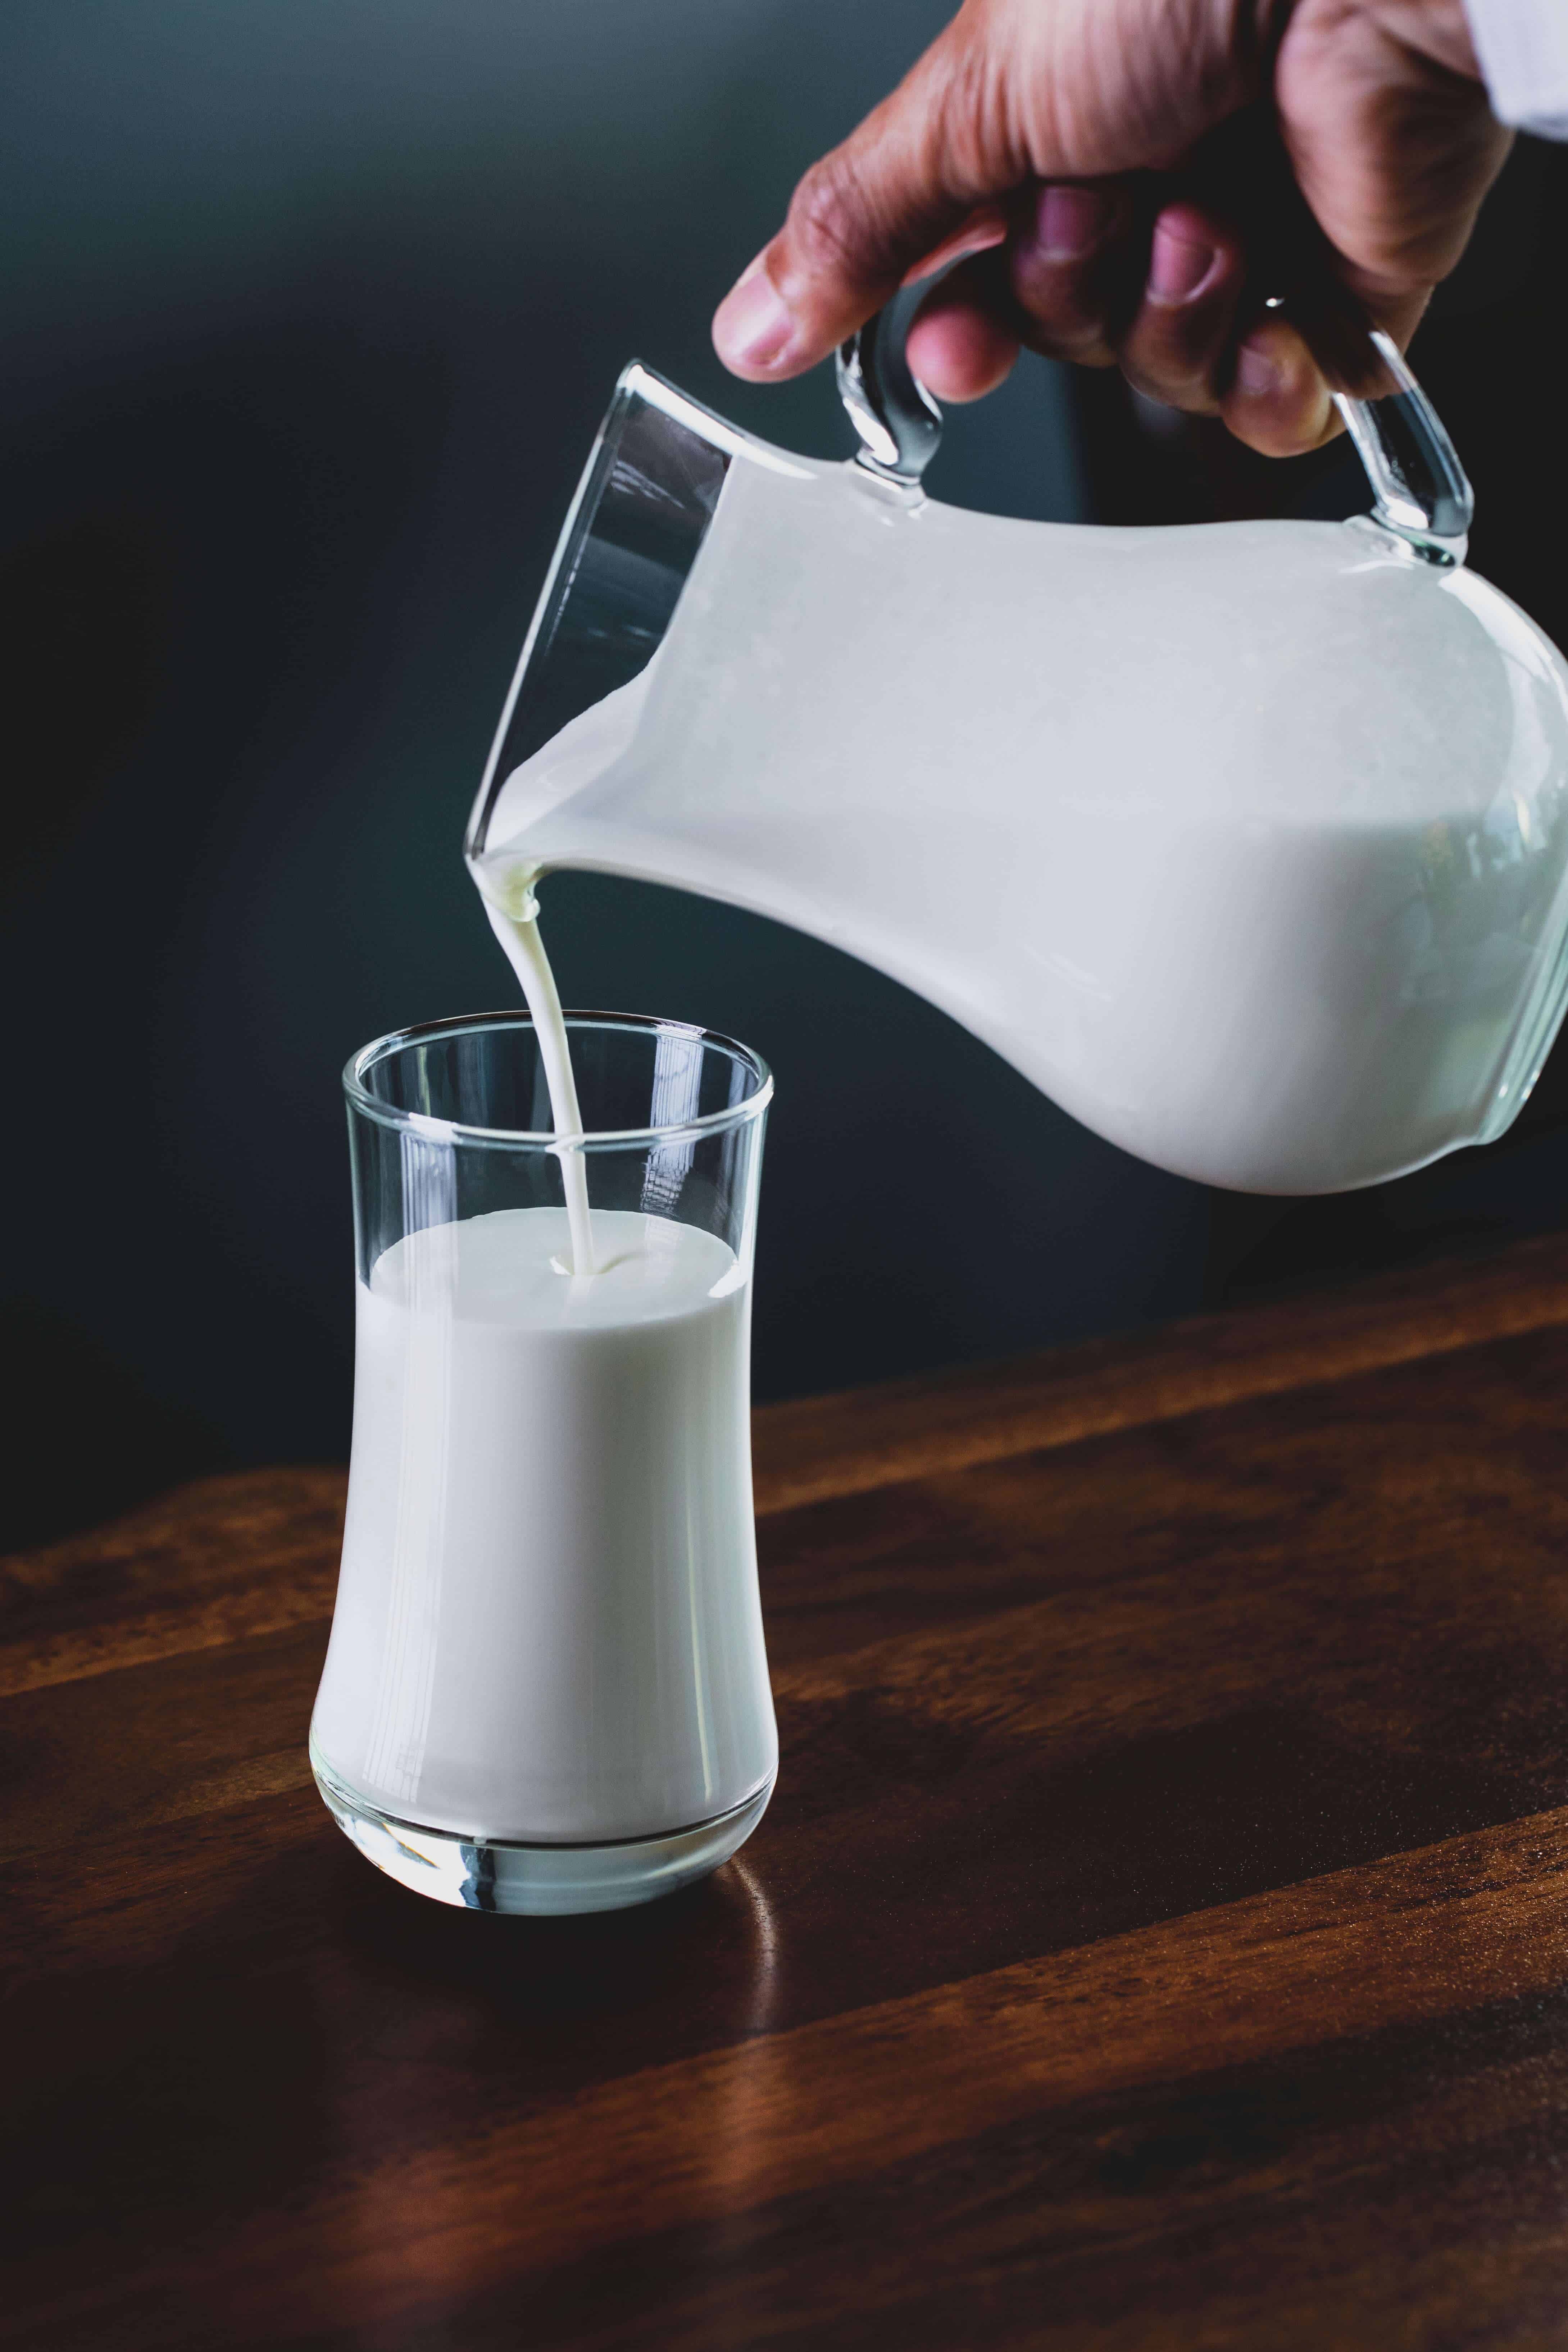 mlieko - eiliv sonas aceron 1379537 unsplash - Potrebujeme mlieko pre život?